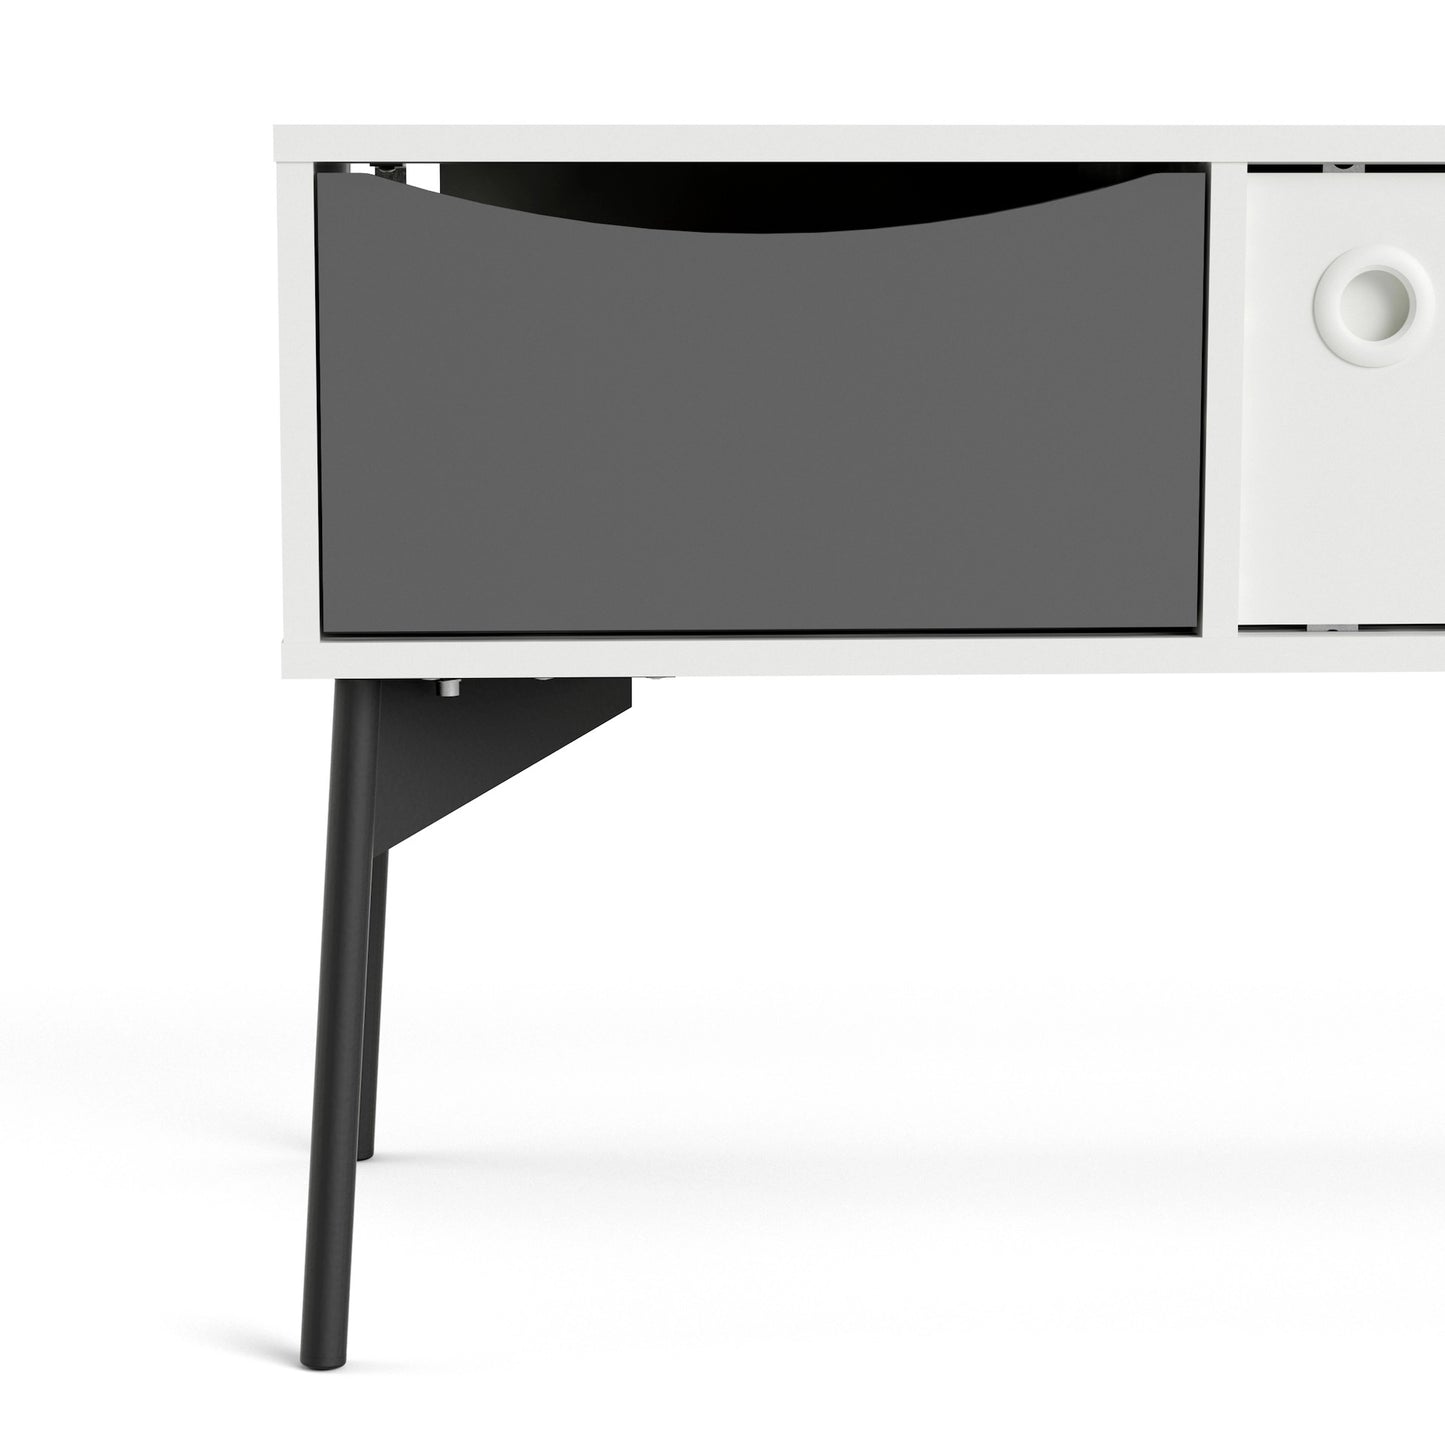 Furniture To Go Fur TV-Unit 2 Sliding Doors + 1 Drawer in Grey & White